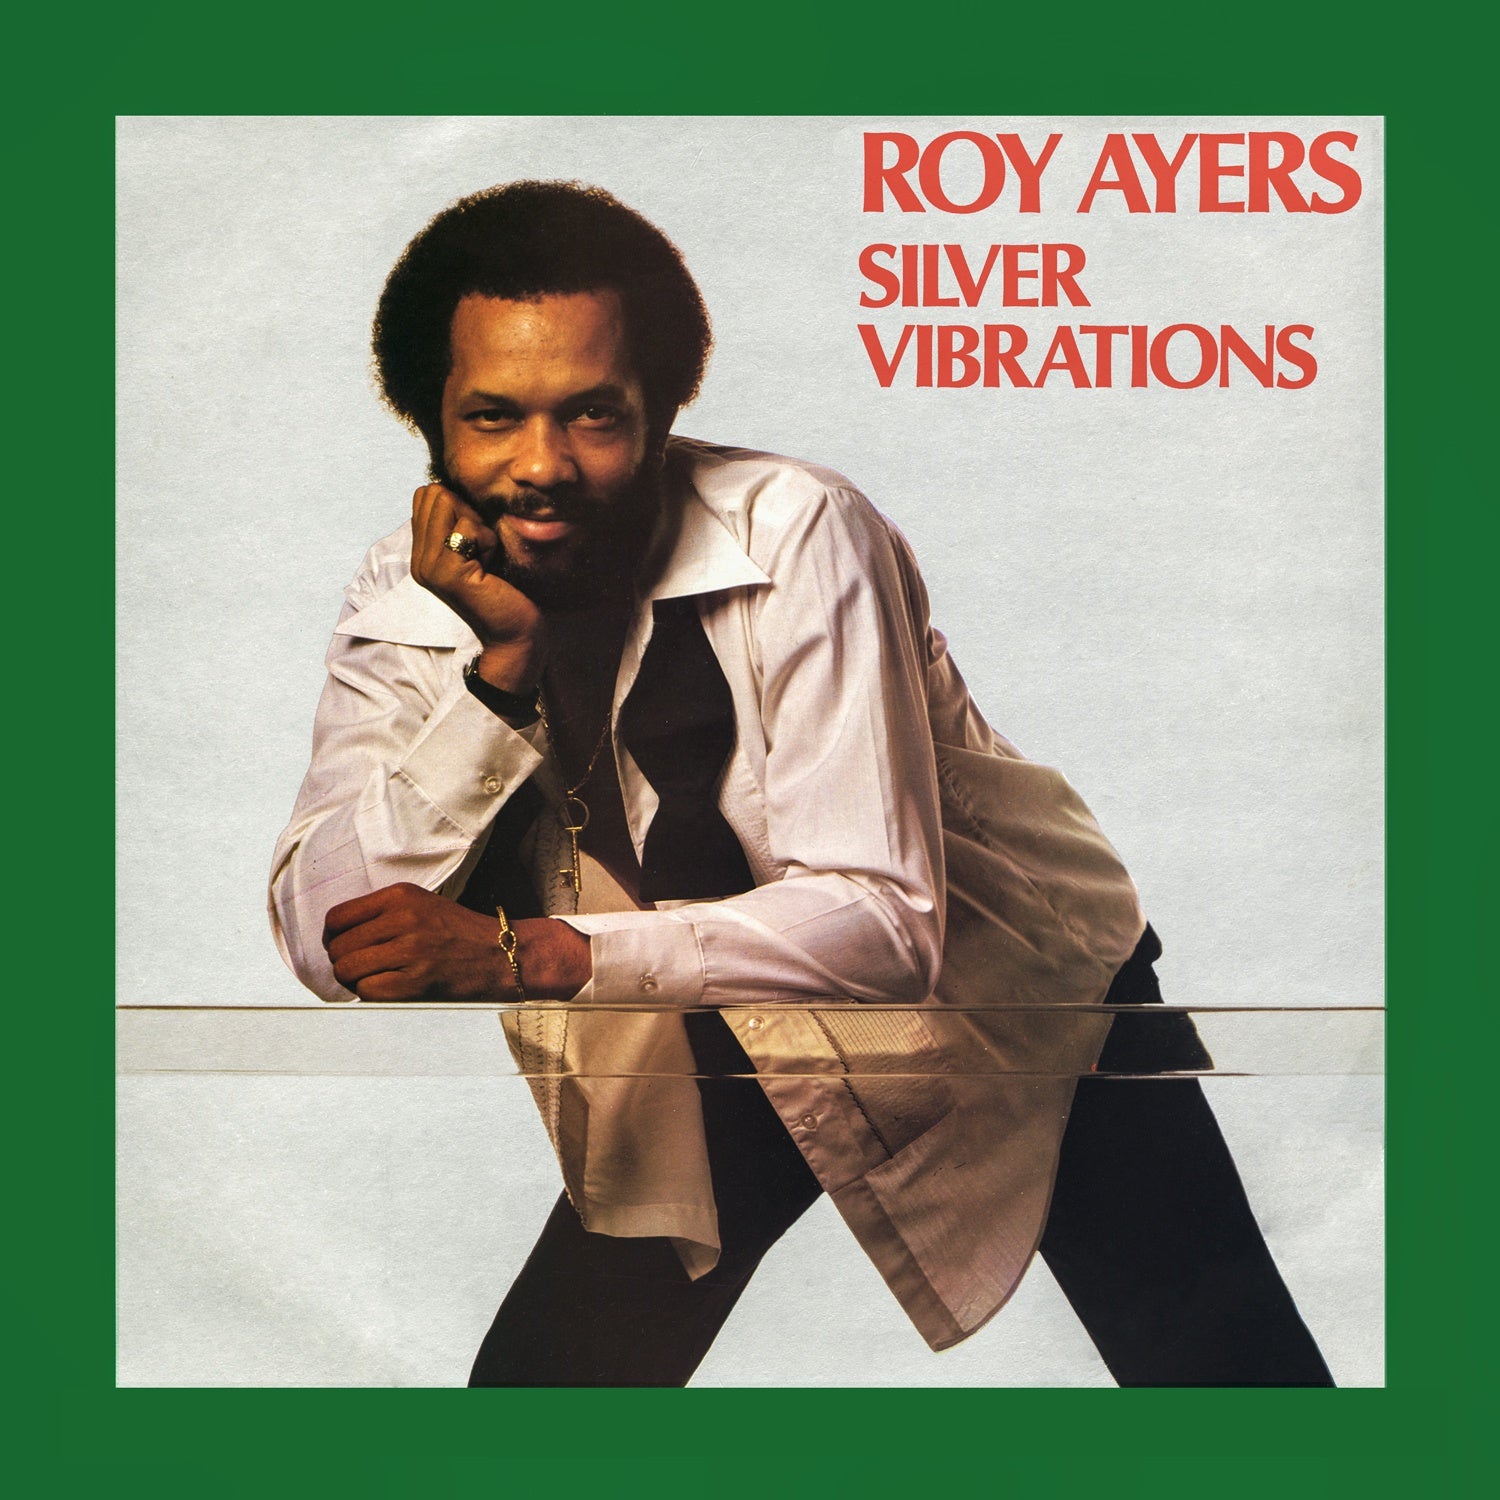 Roy Ayers - Silver Vibrations (1983) - New 2 Lp Record 2019 BBE Europe Import 180 gram Vinyl - Jazz-Funk / Disco